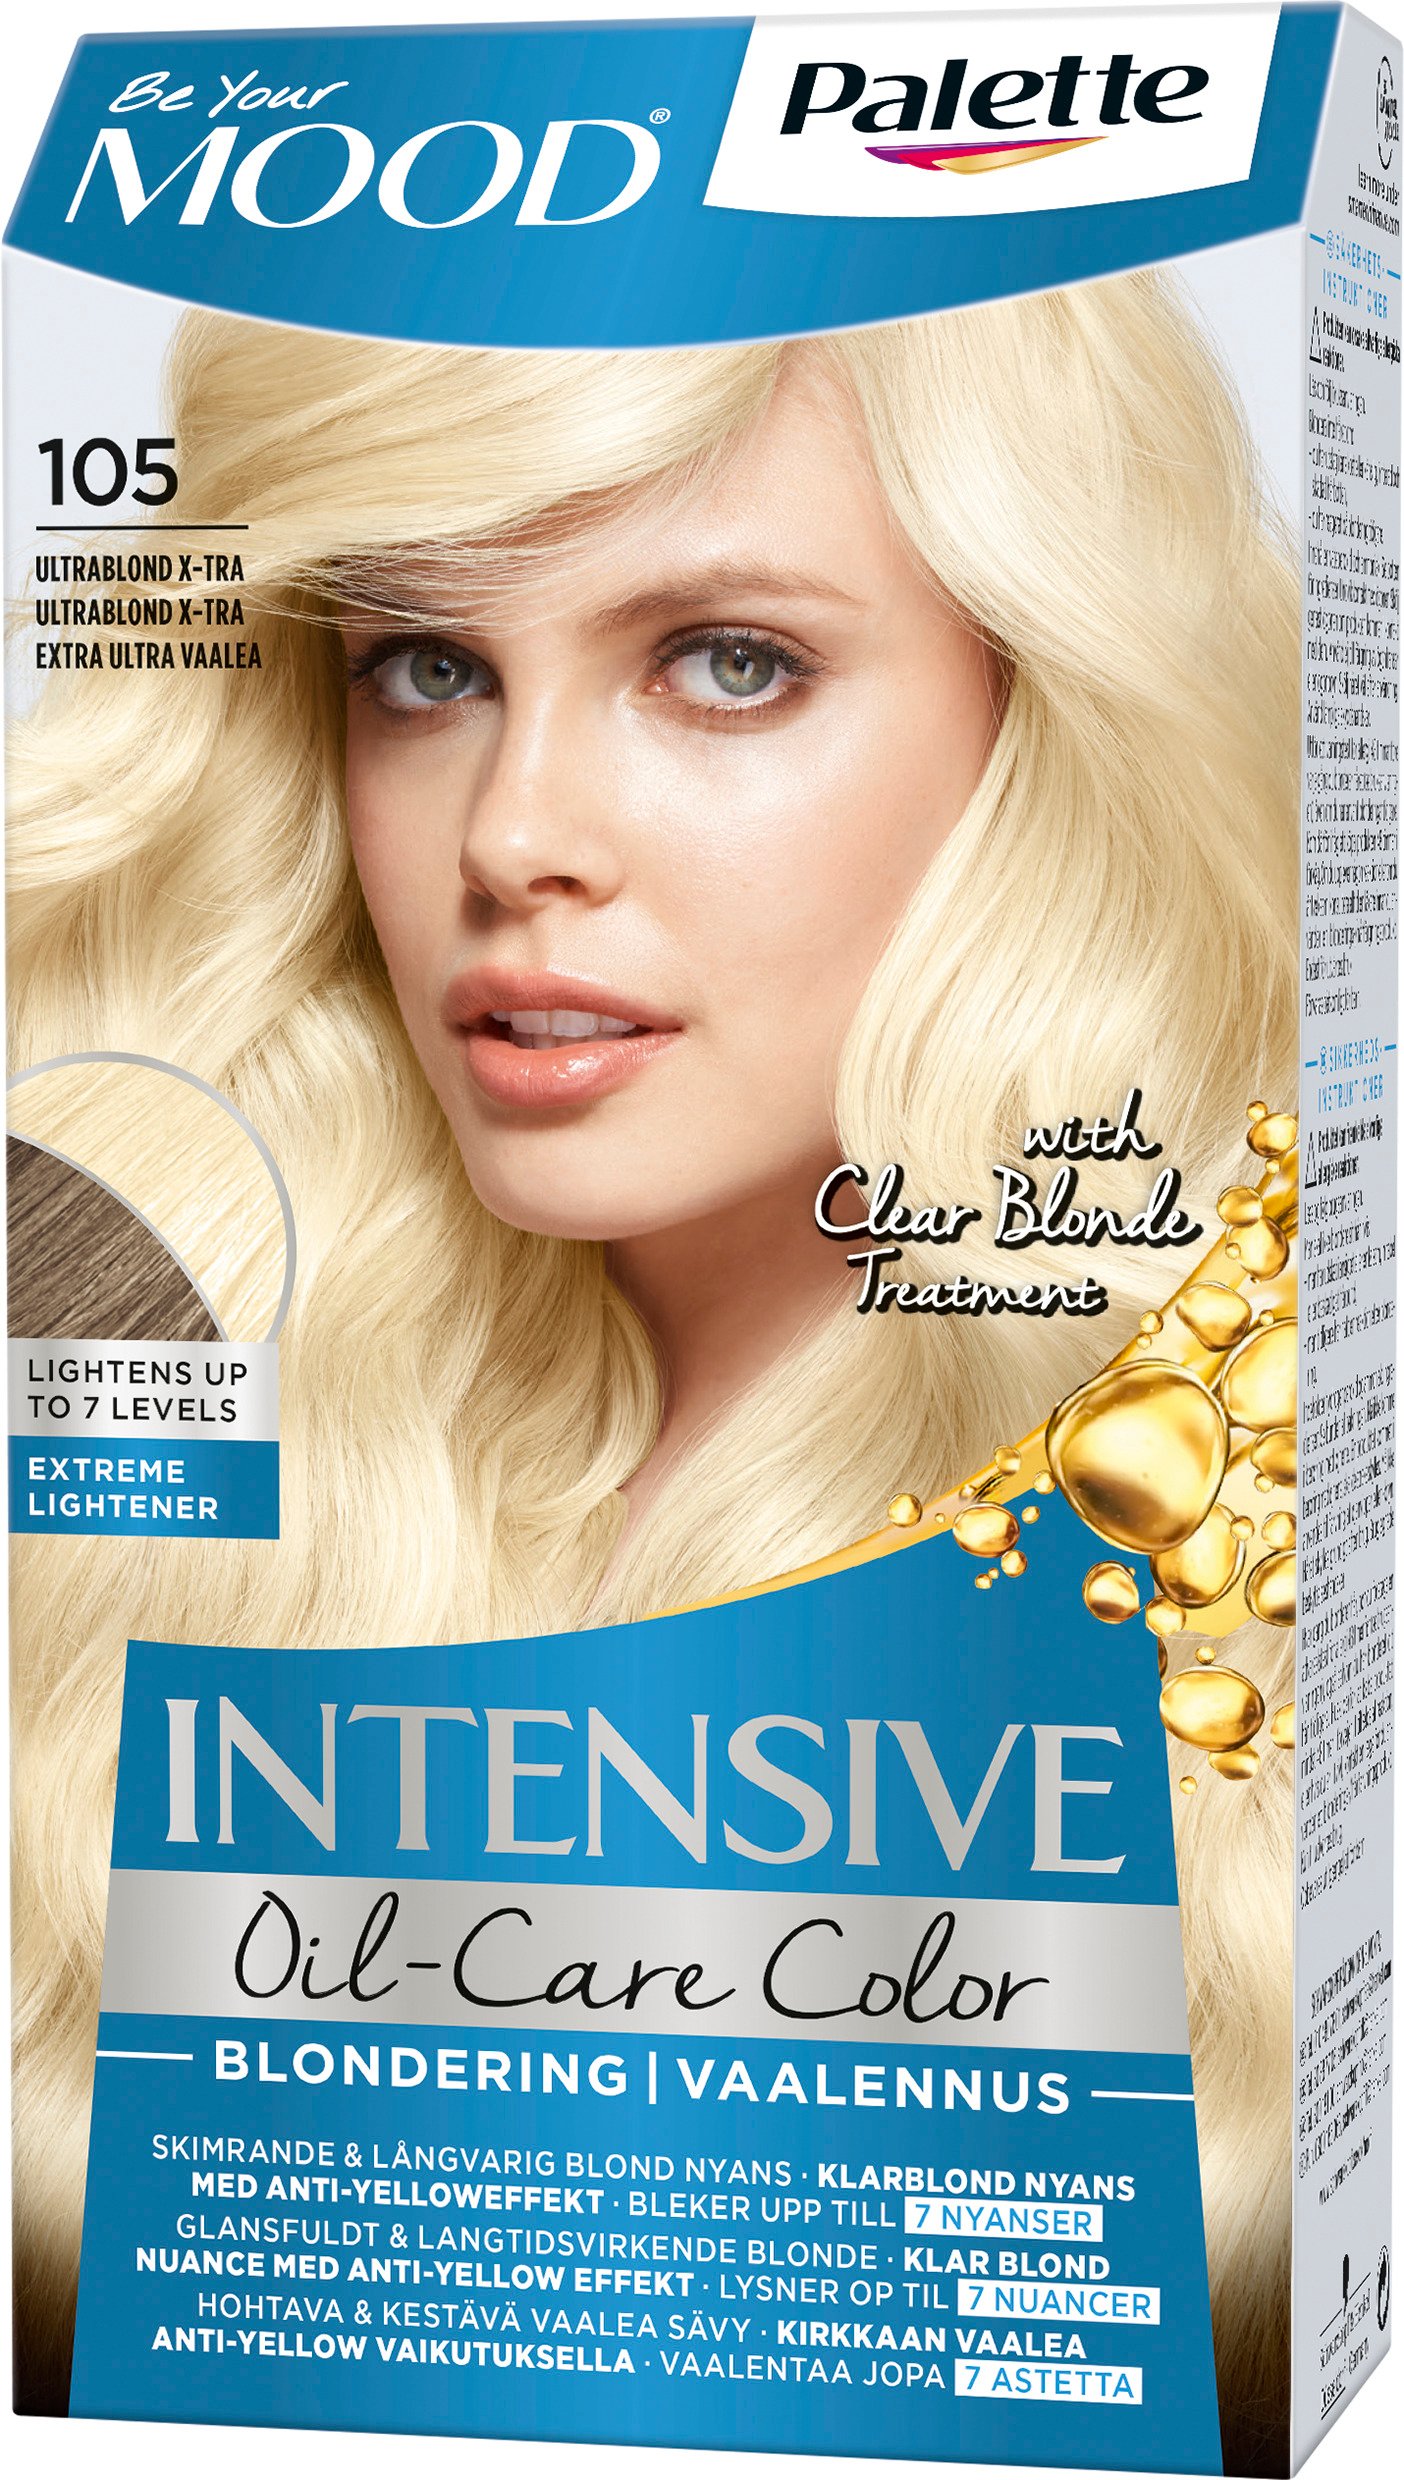 MOOD Palette Blondering 105 Ultrablond X-tra